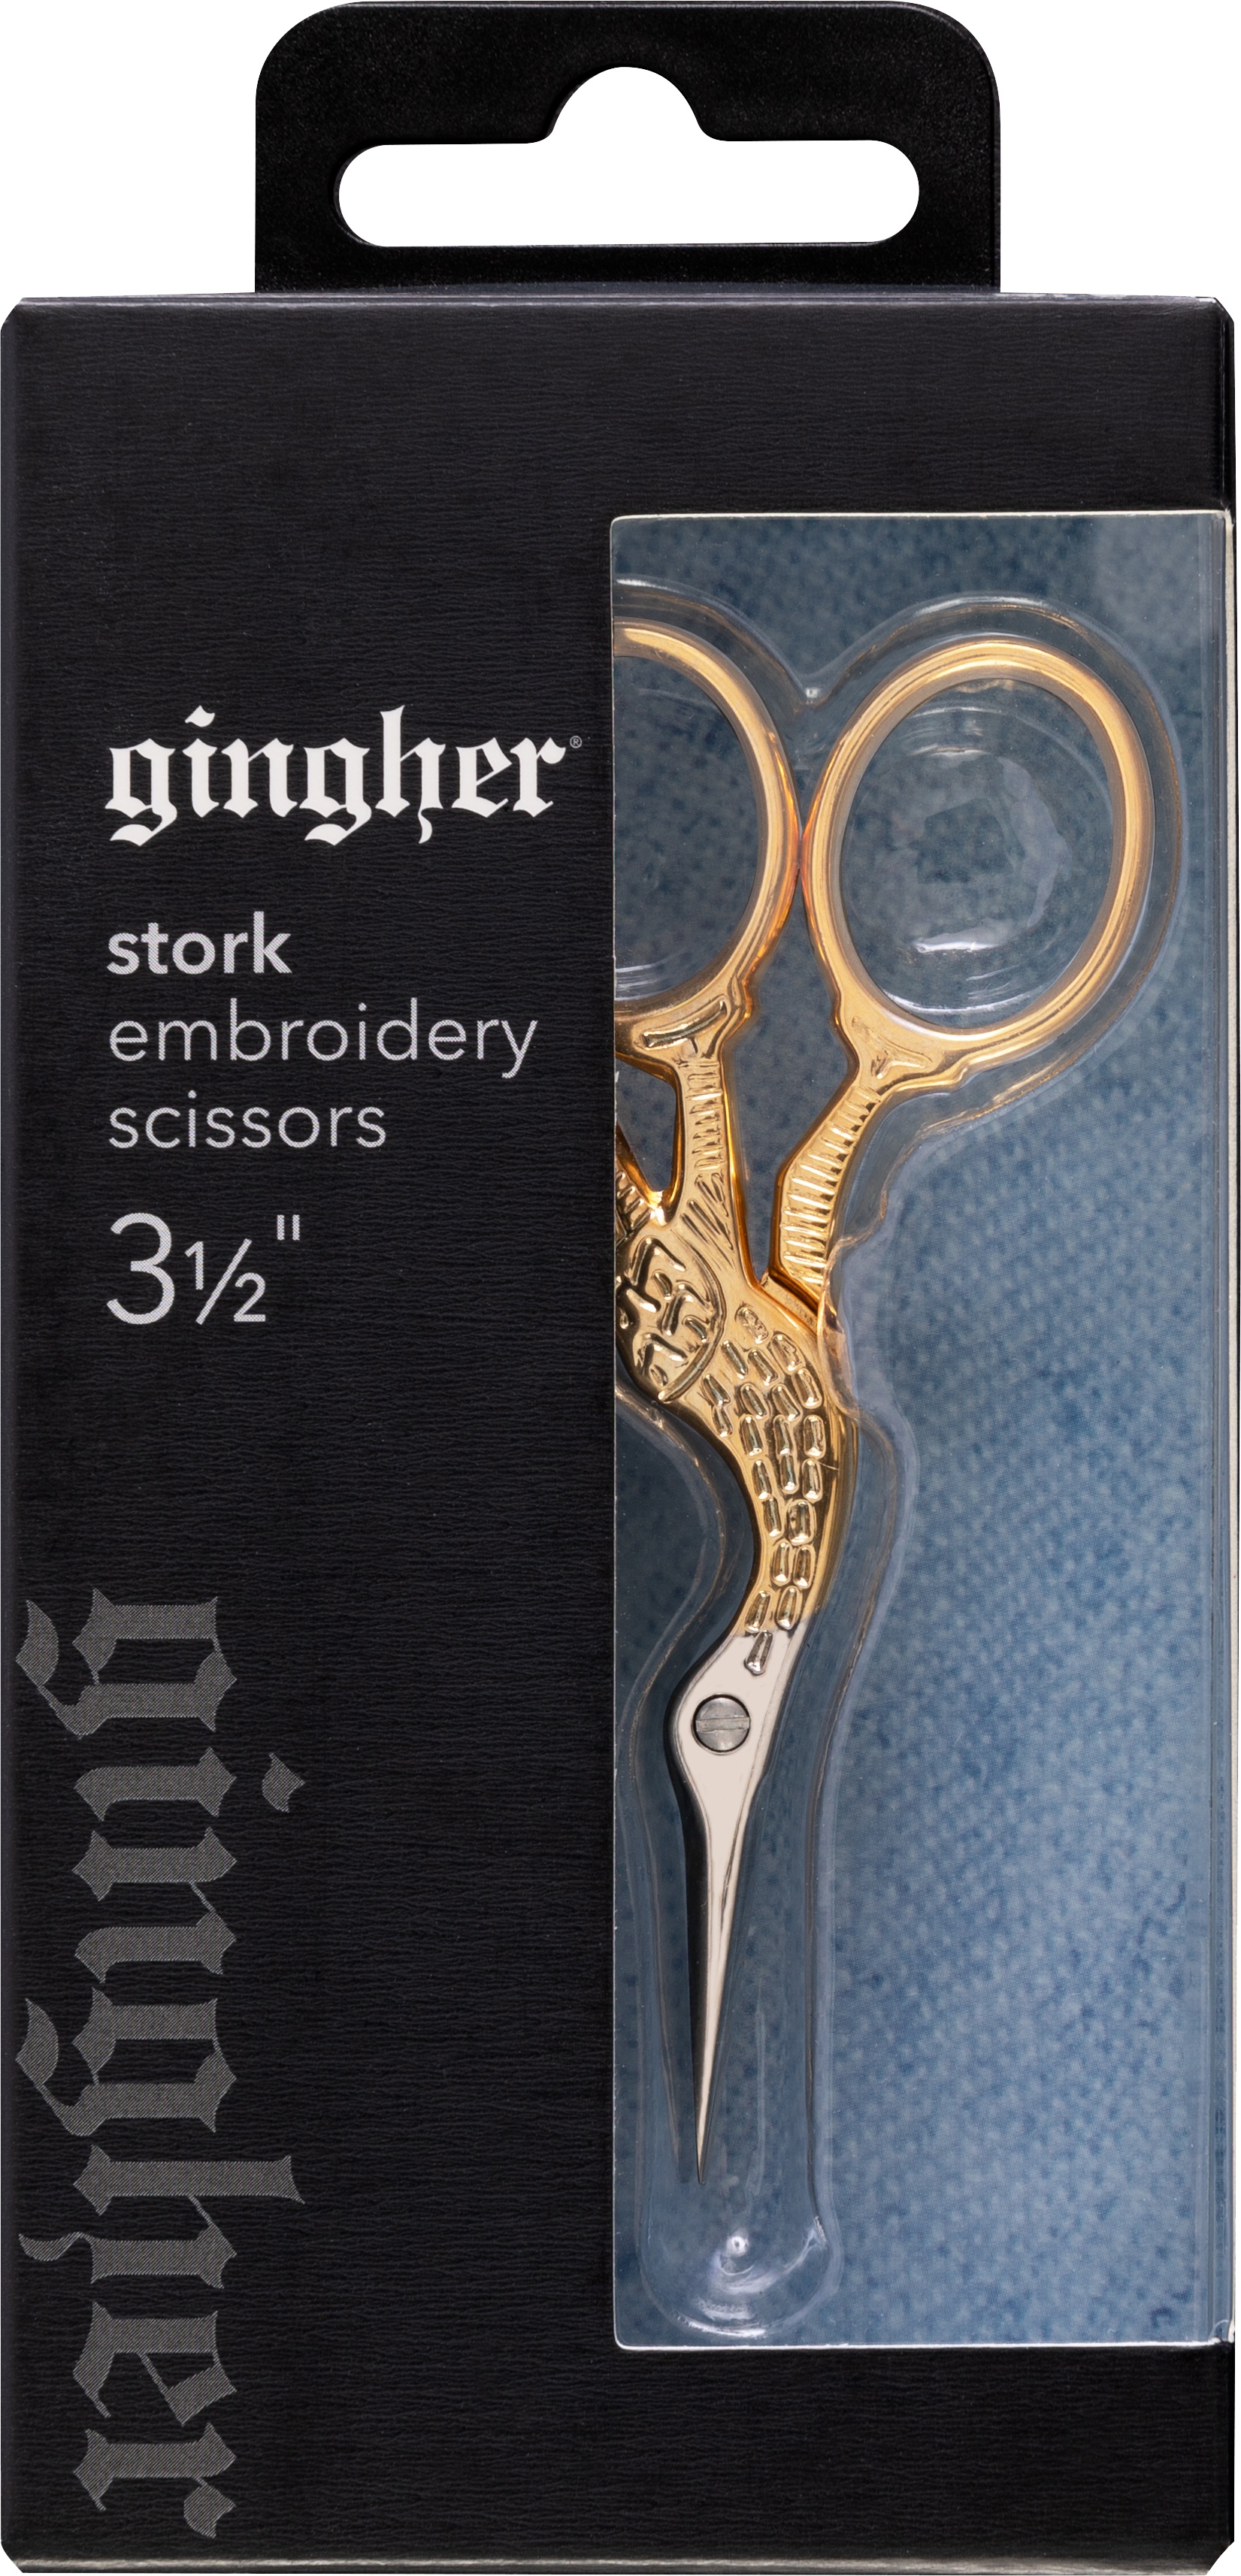 Stork Embroidery Scissors 3.5"-W/Leather Sheath - Photo 1/1